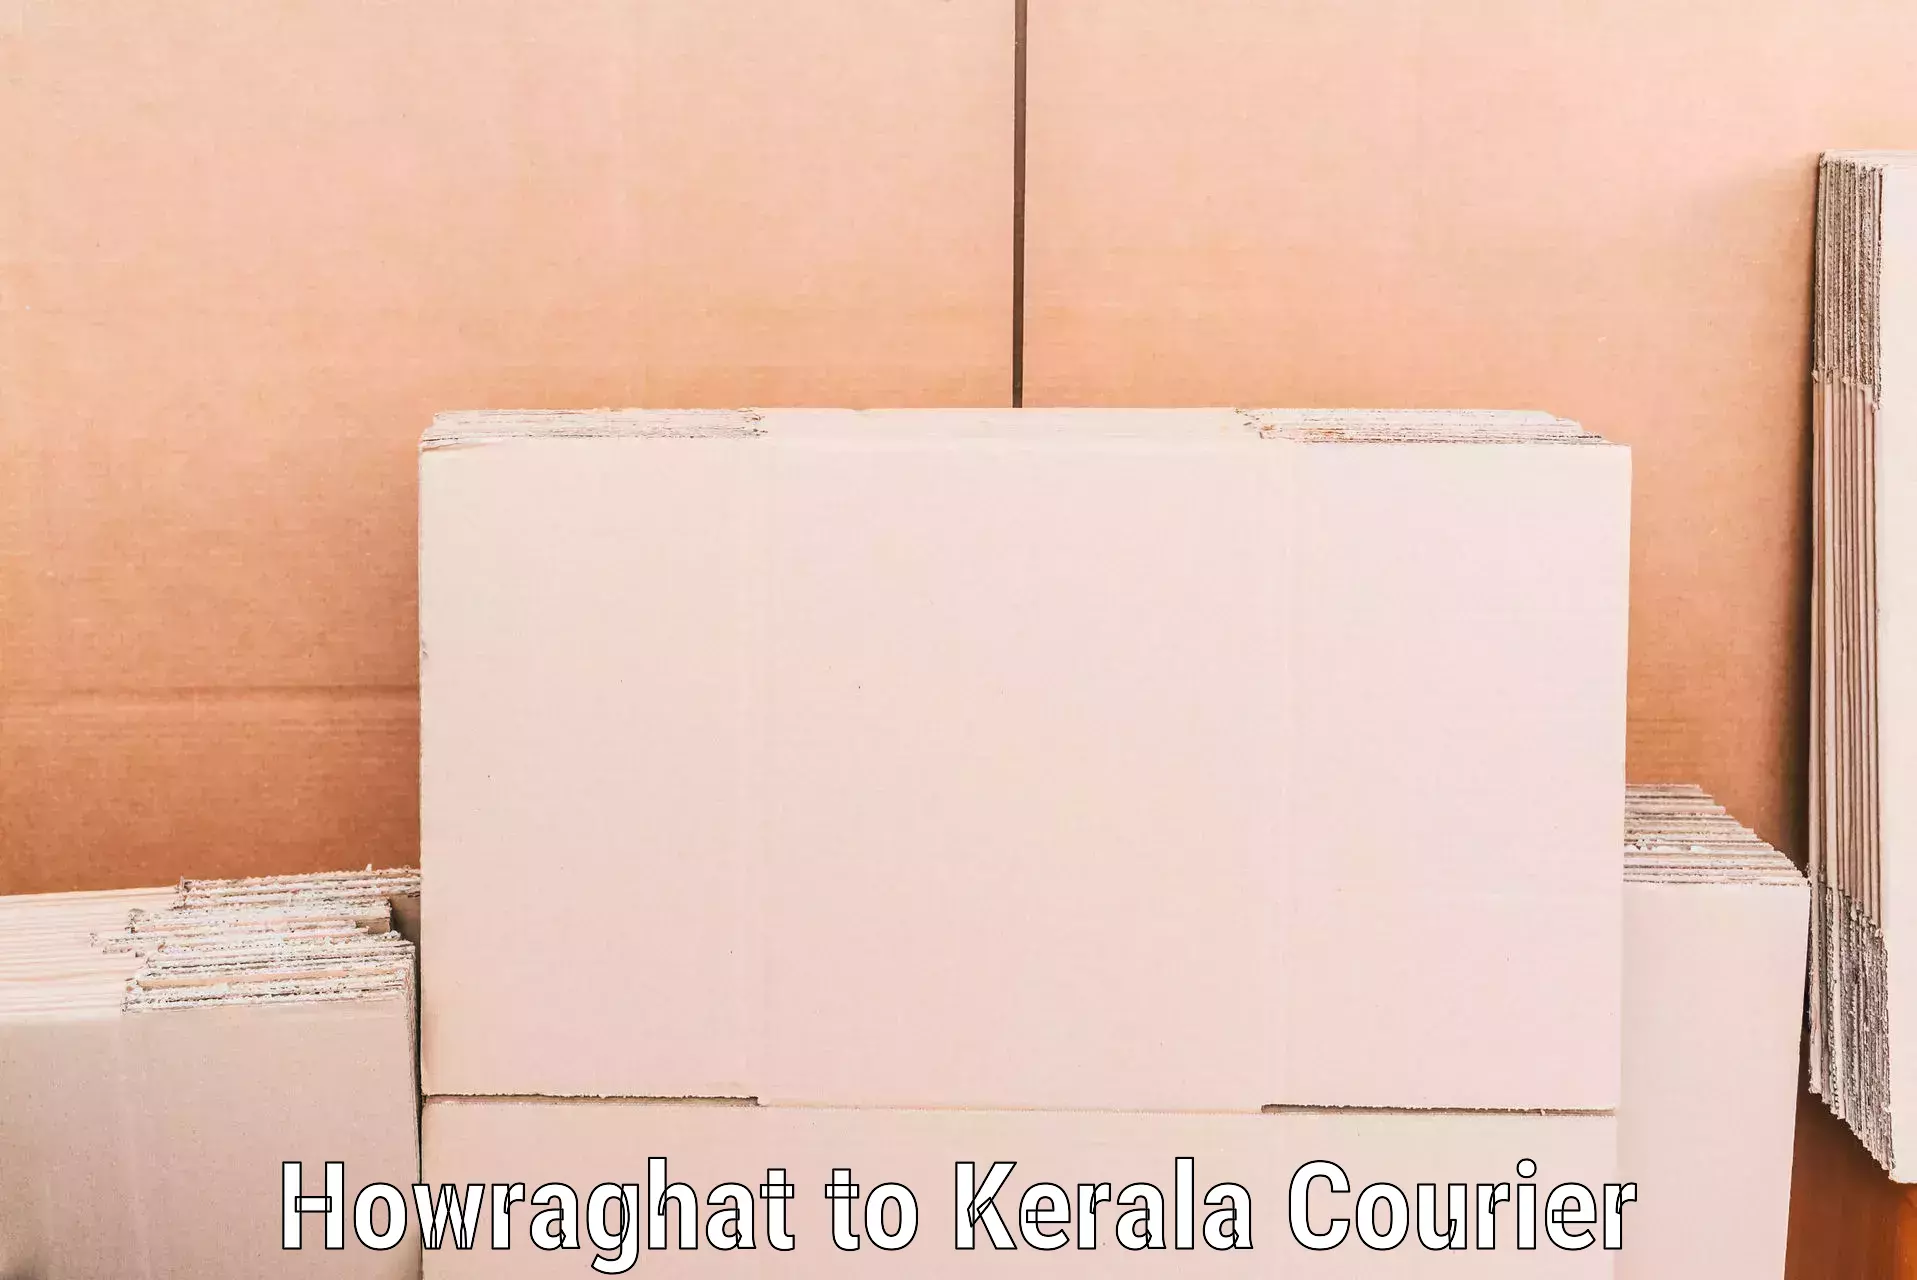 Household transport solutions Howraghat to Kerala